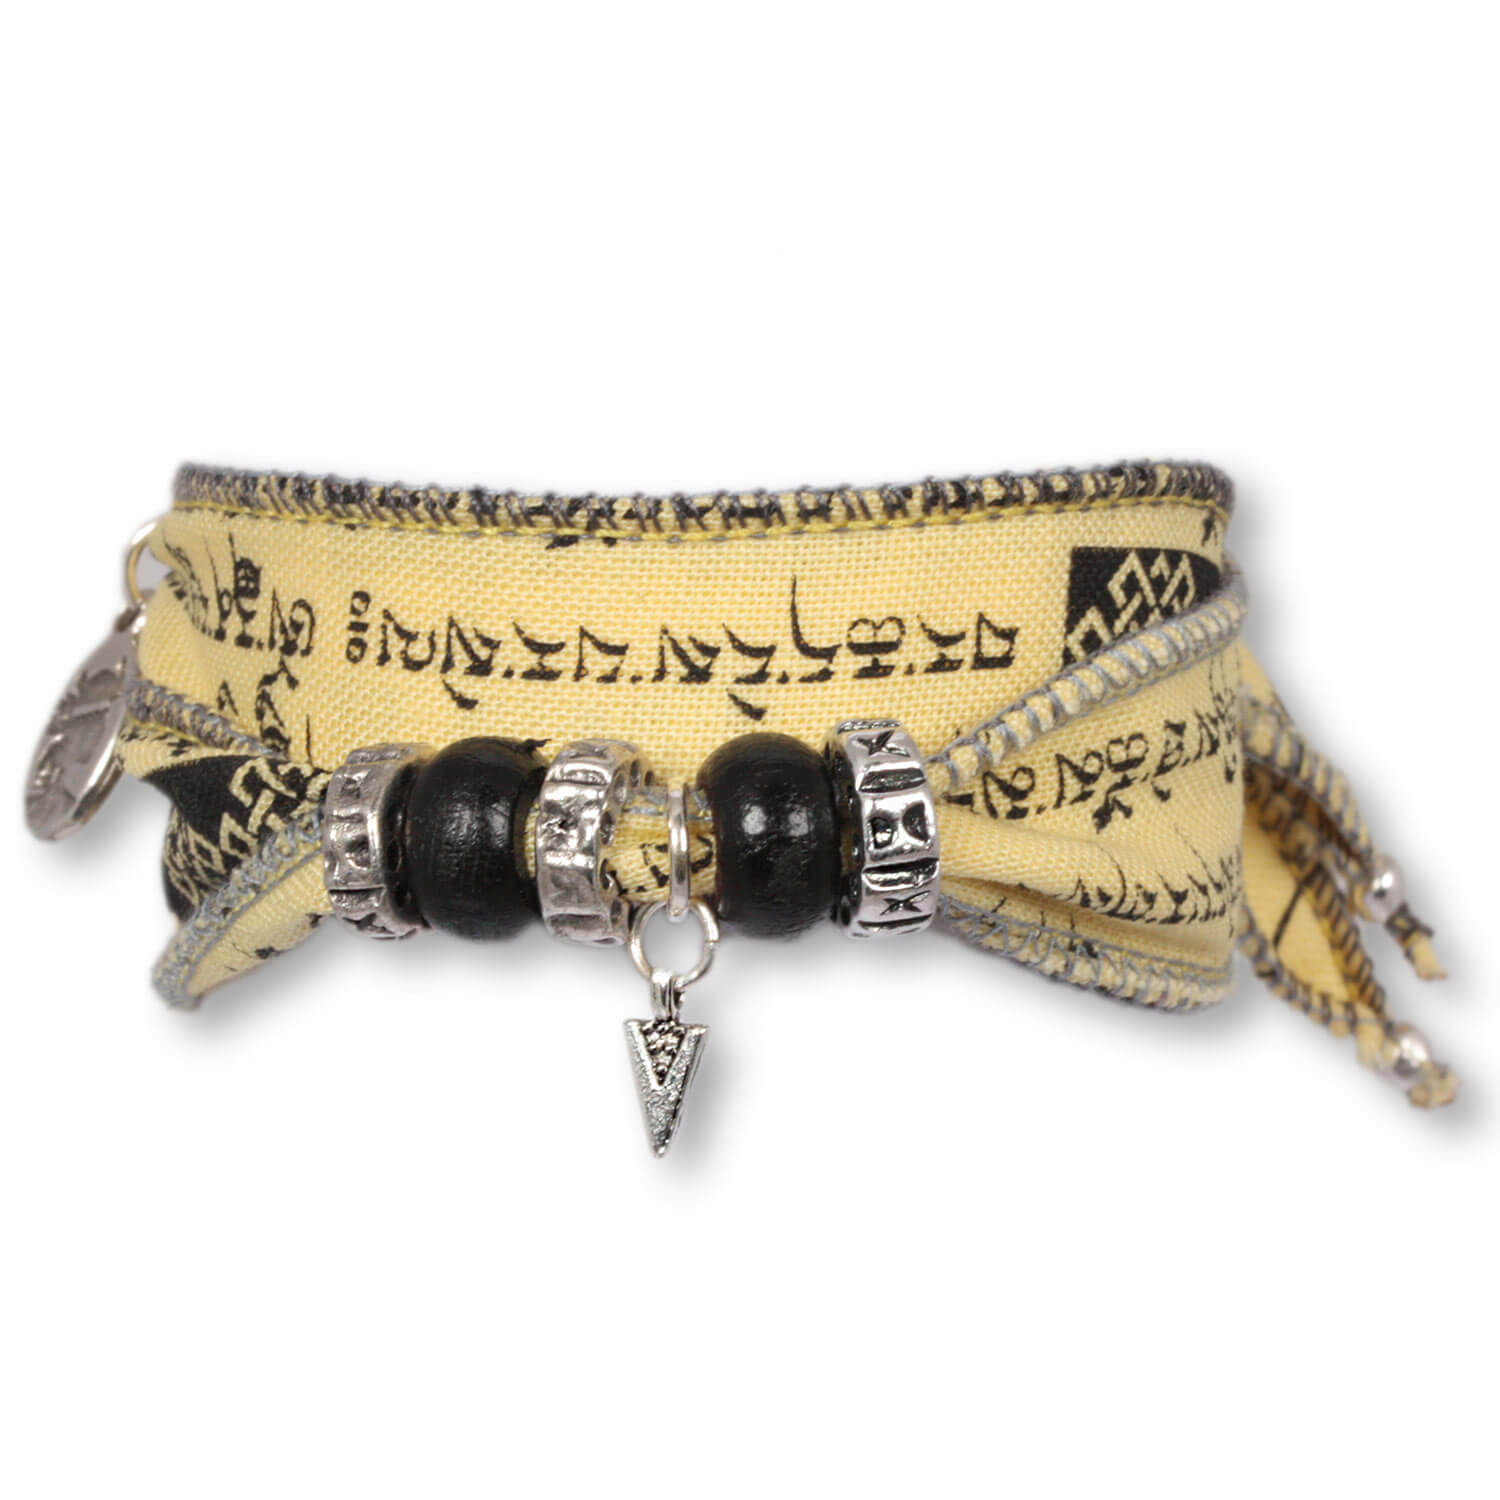 Earth Arrow - Tibetan Wish bracelet made from Tibetan prayer flags